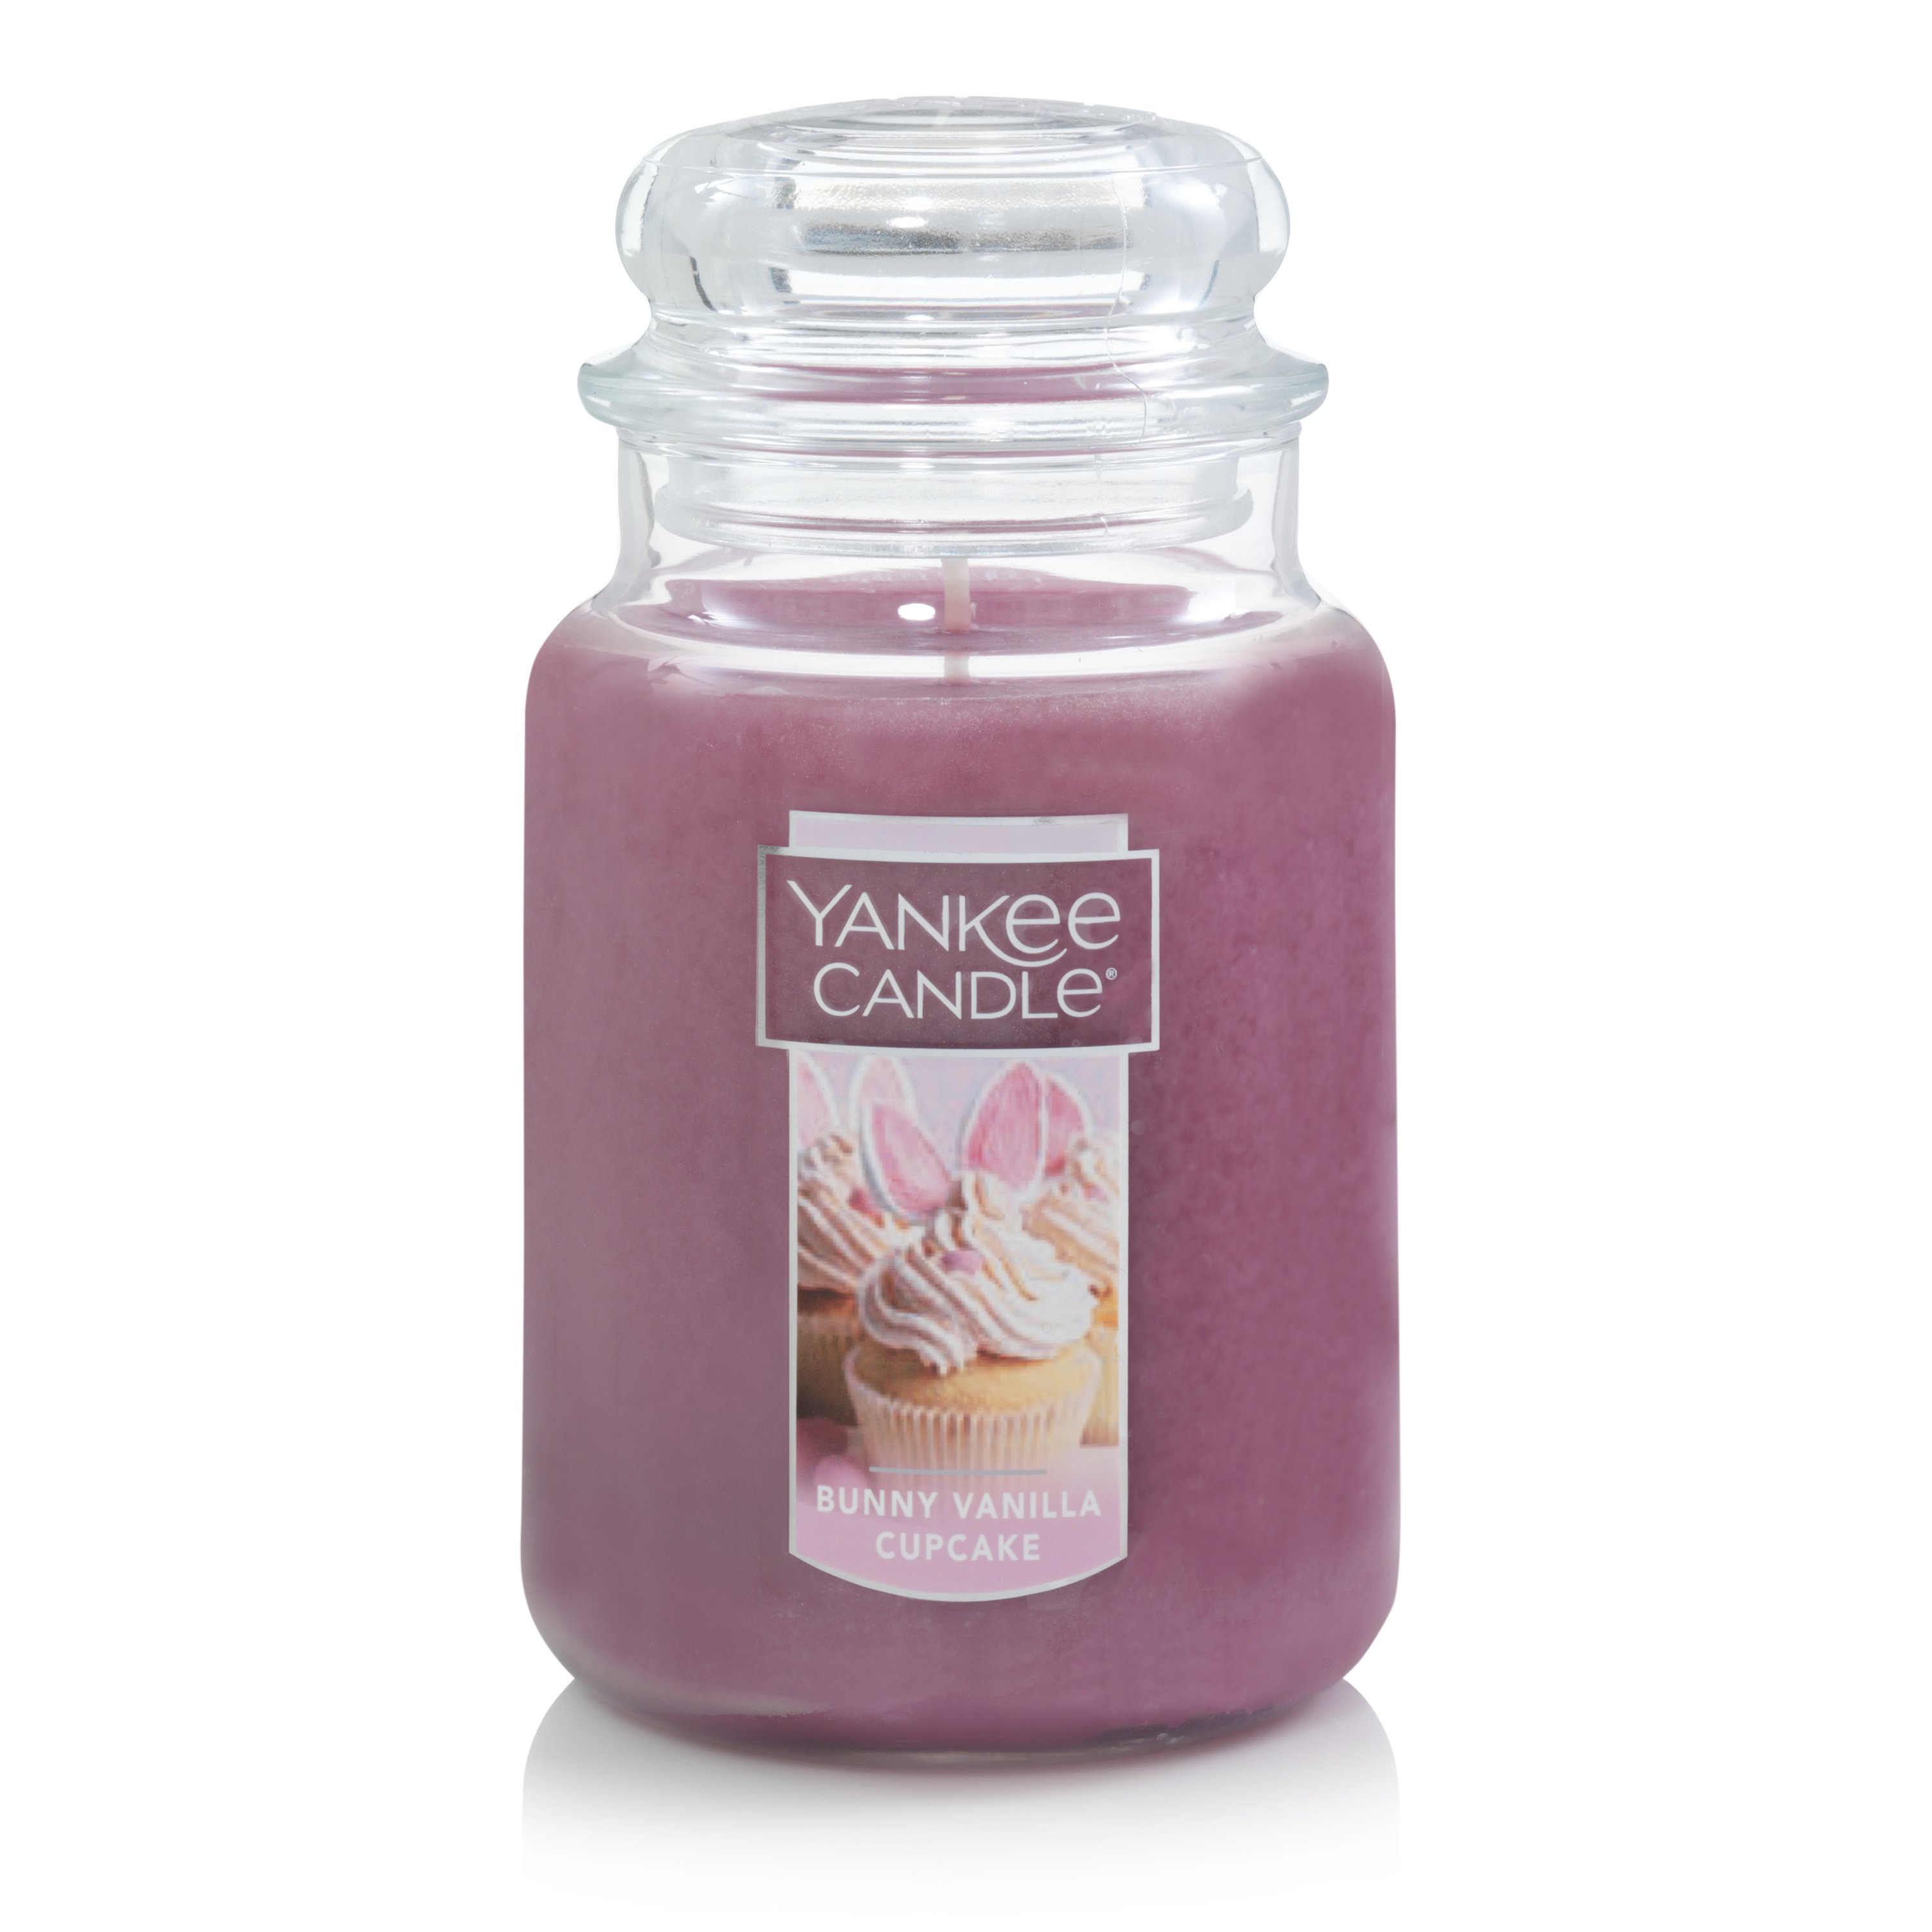 Bunny Vanilla Cupcake Candle, Yankee Candle